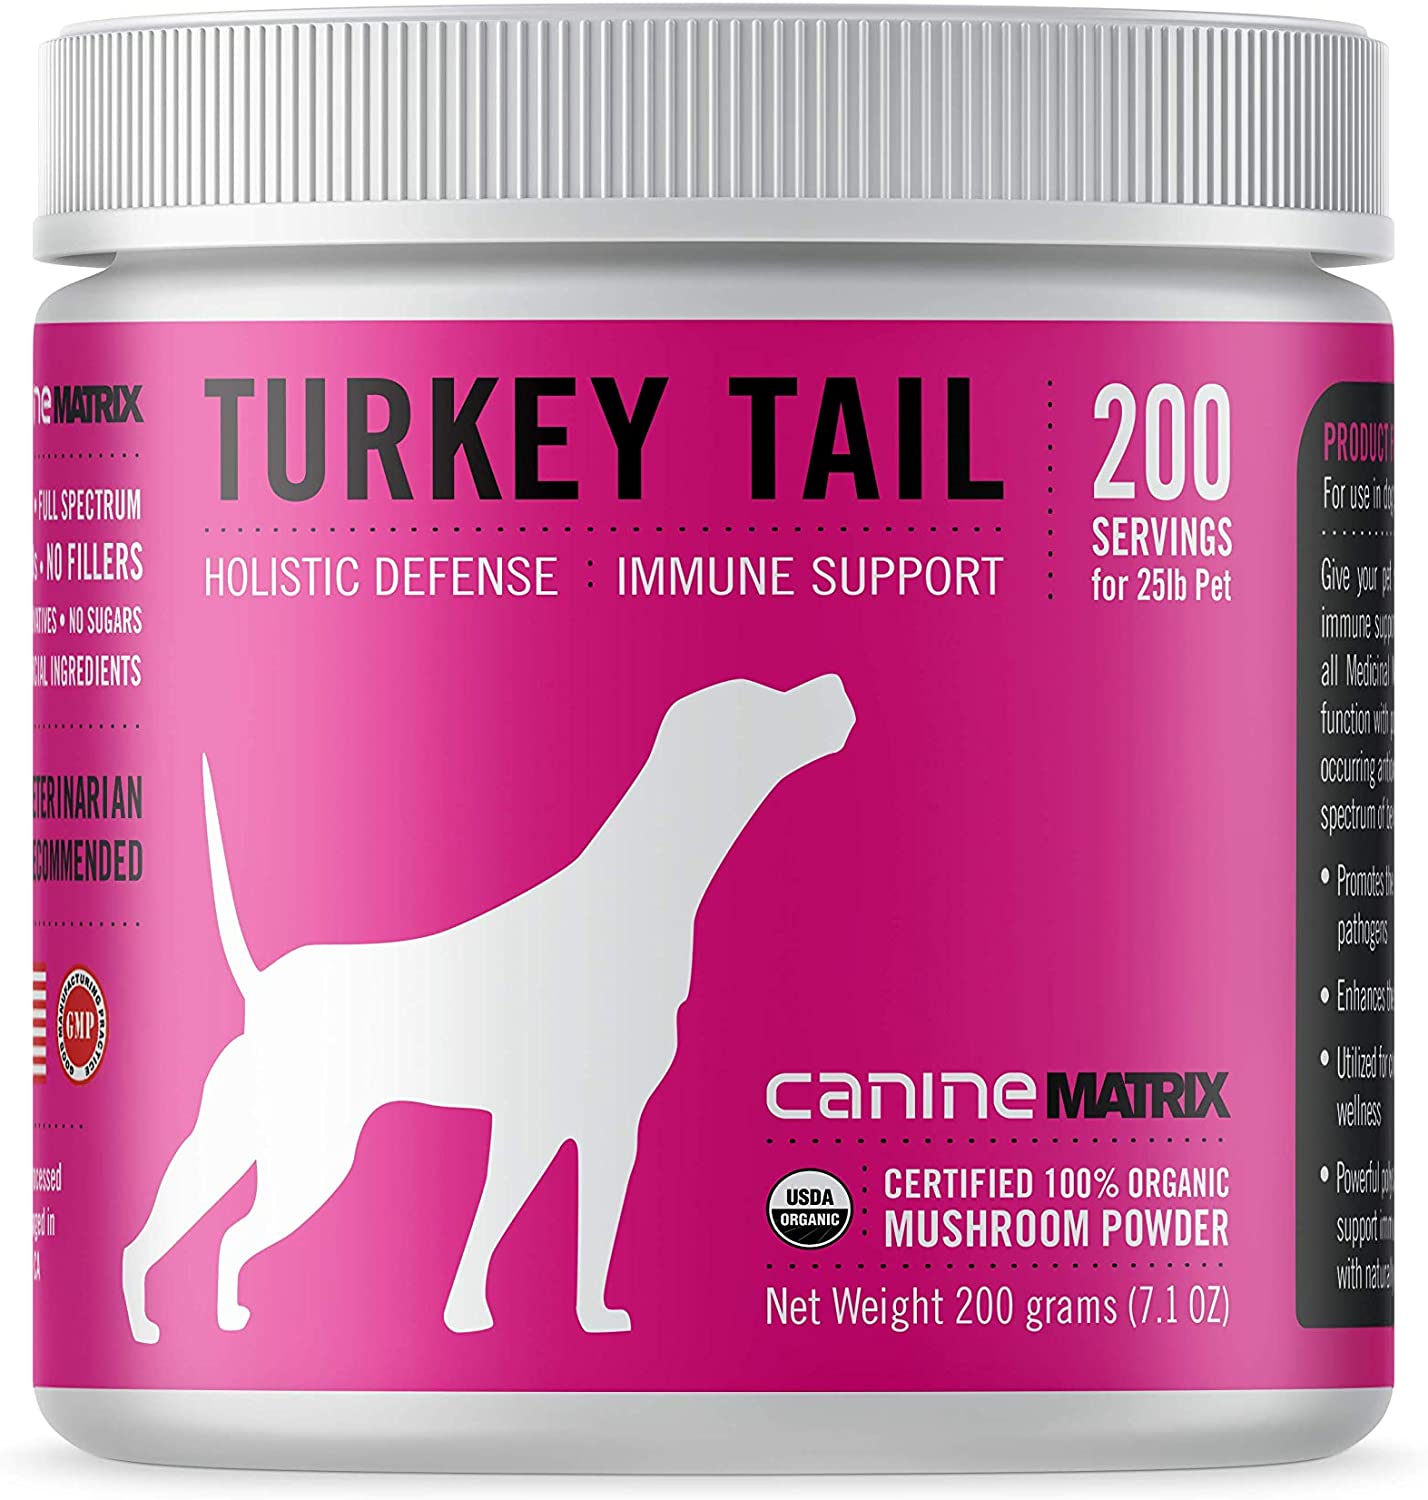 Mushroom Matrix Turkey Tail Holistic Defense & Immune Support Supplements